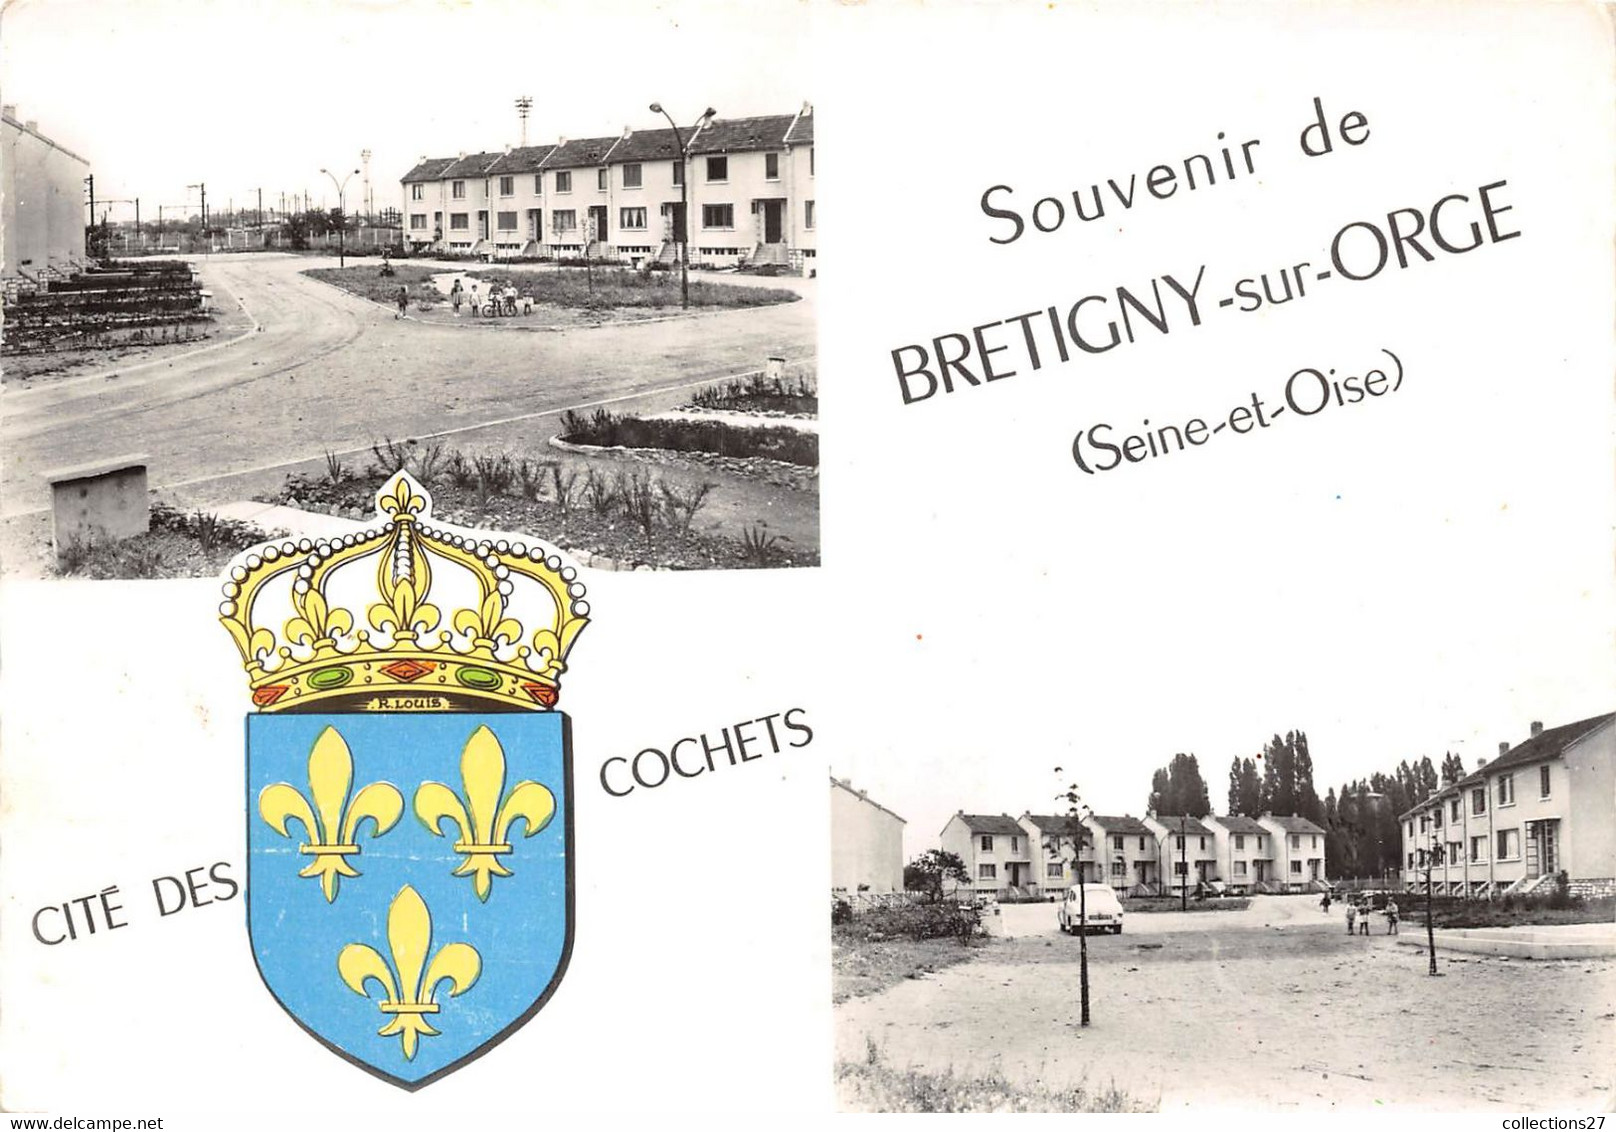 91-BRETIGNY-SUR-ORGE- MULTIVUES CITE DES COCHETS - Bretigny Sur Orge